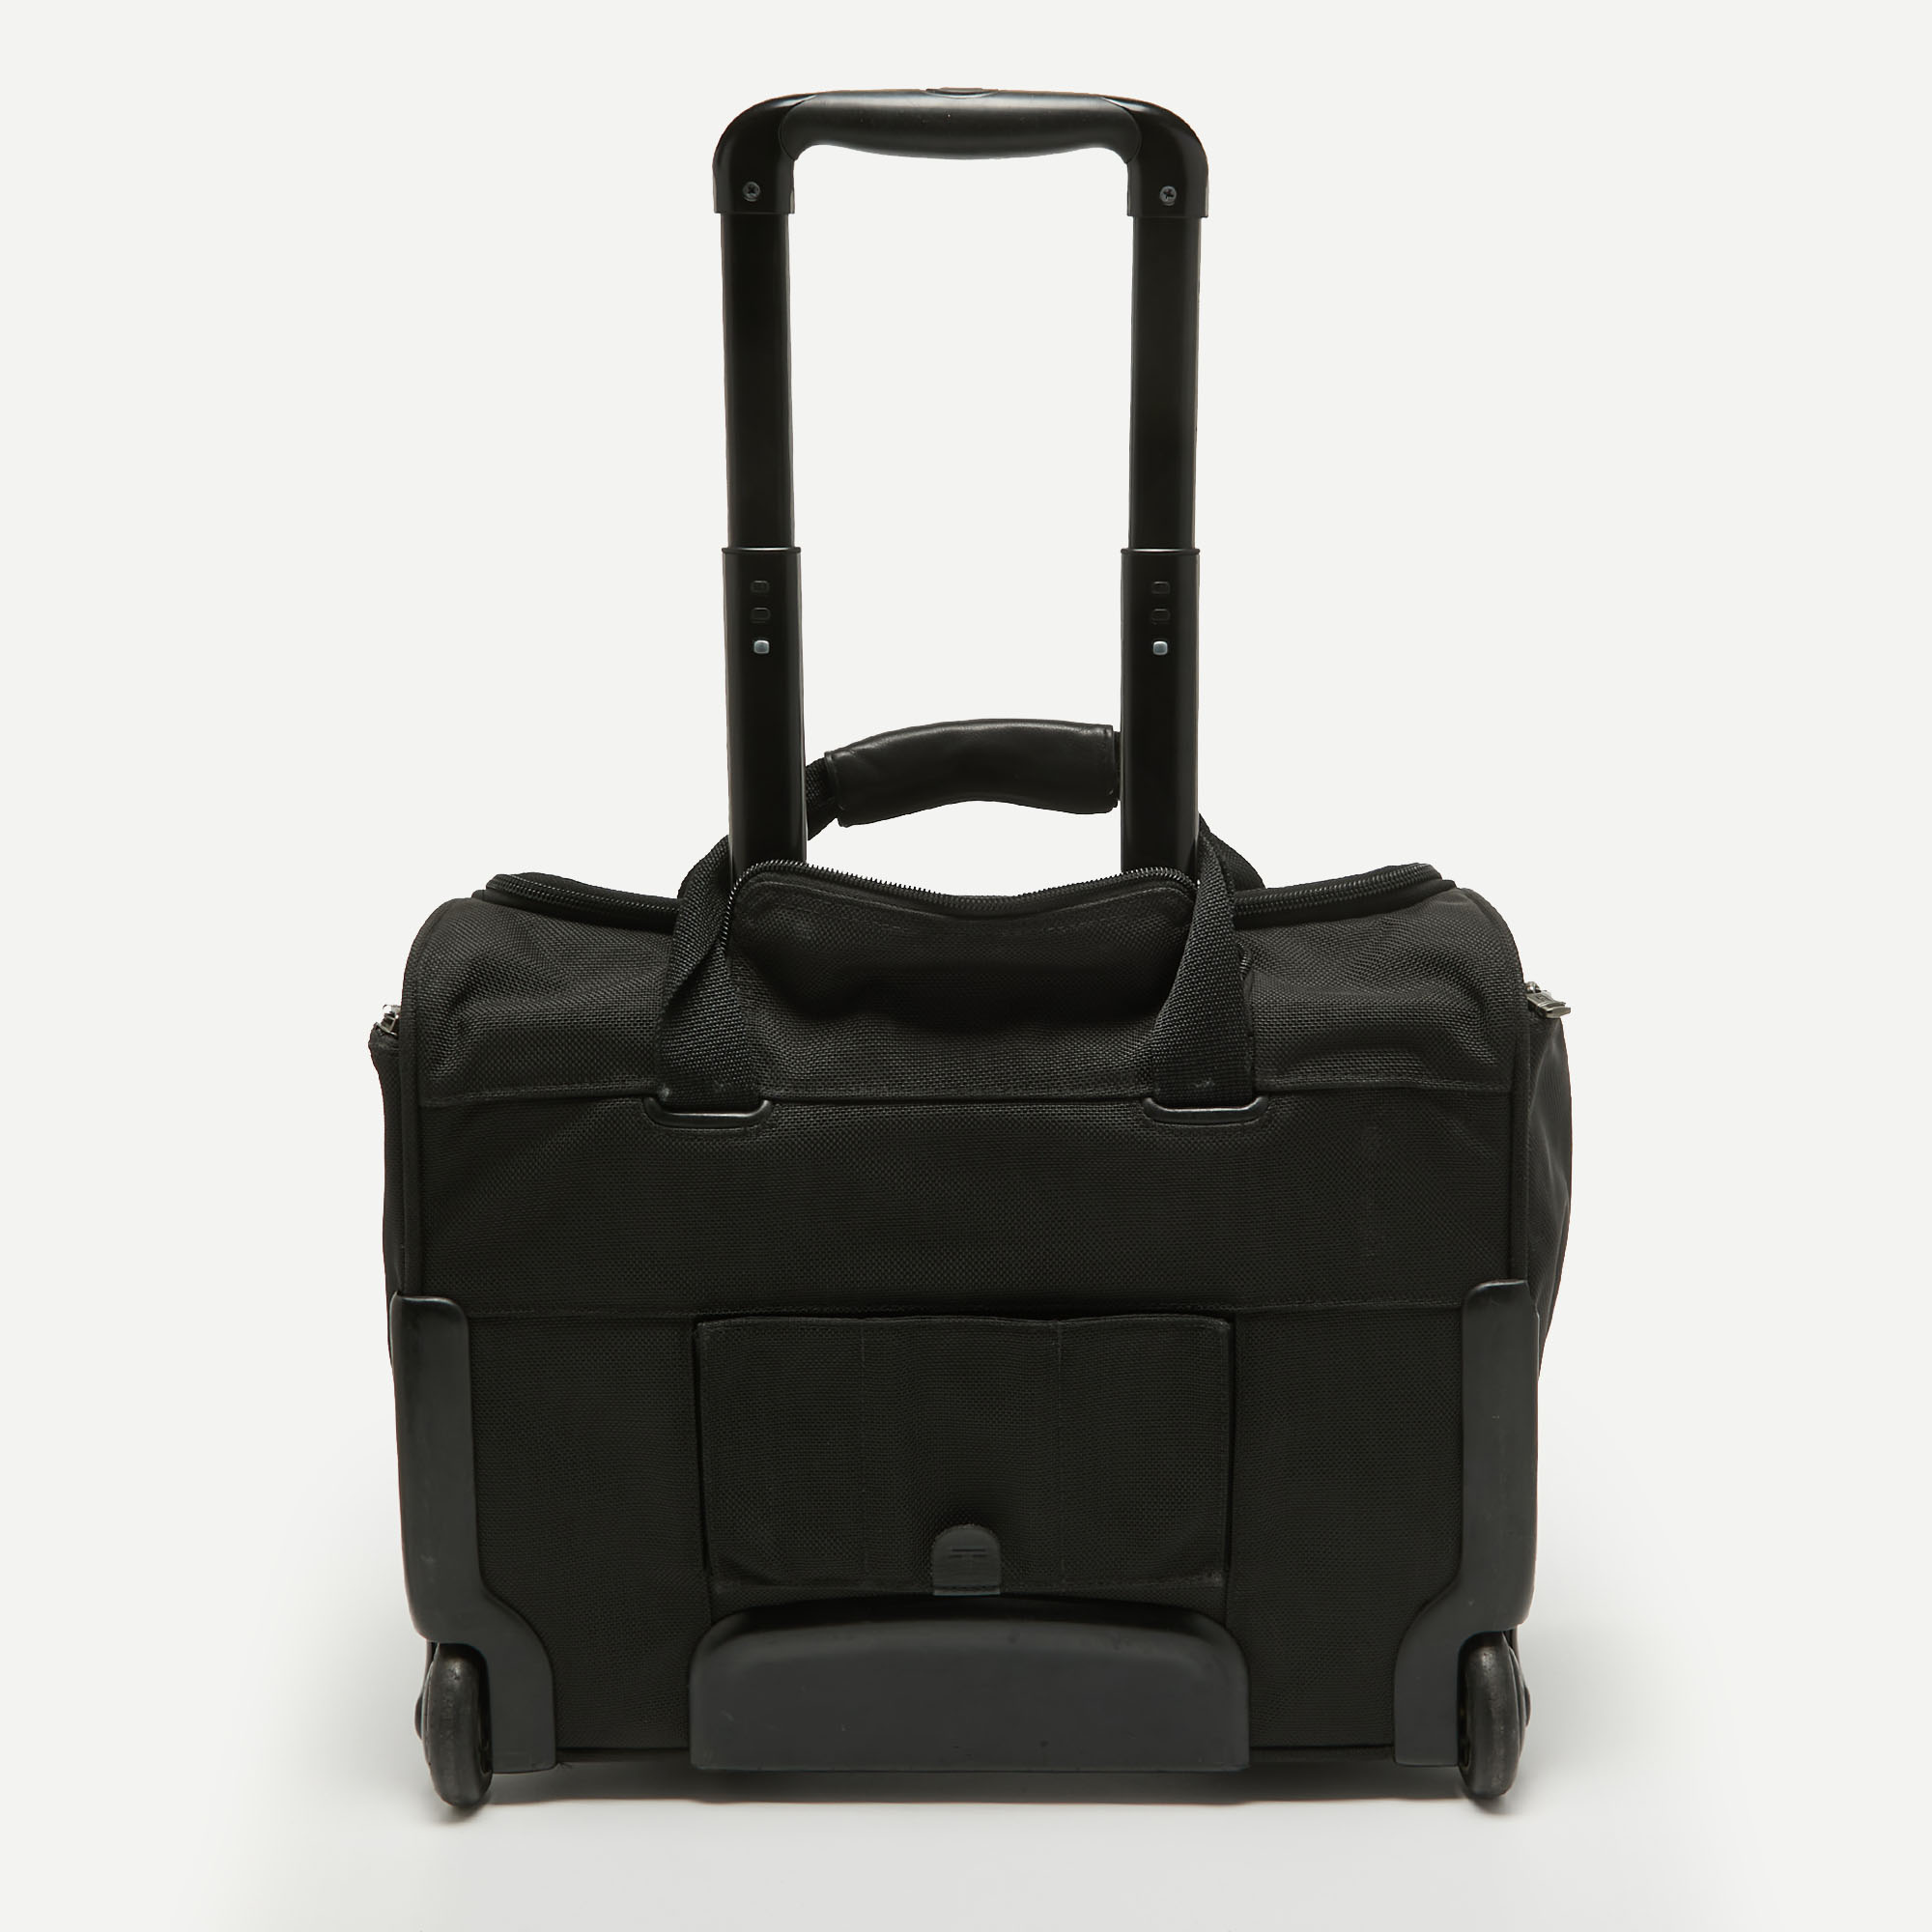 TUMI Black Nylon G4 Compact Carry-On Luggage